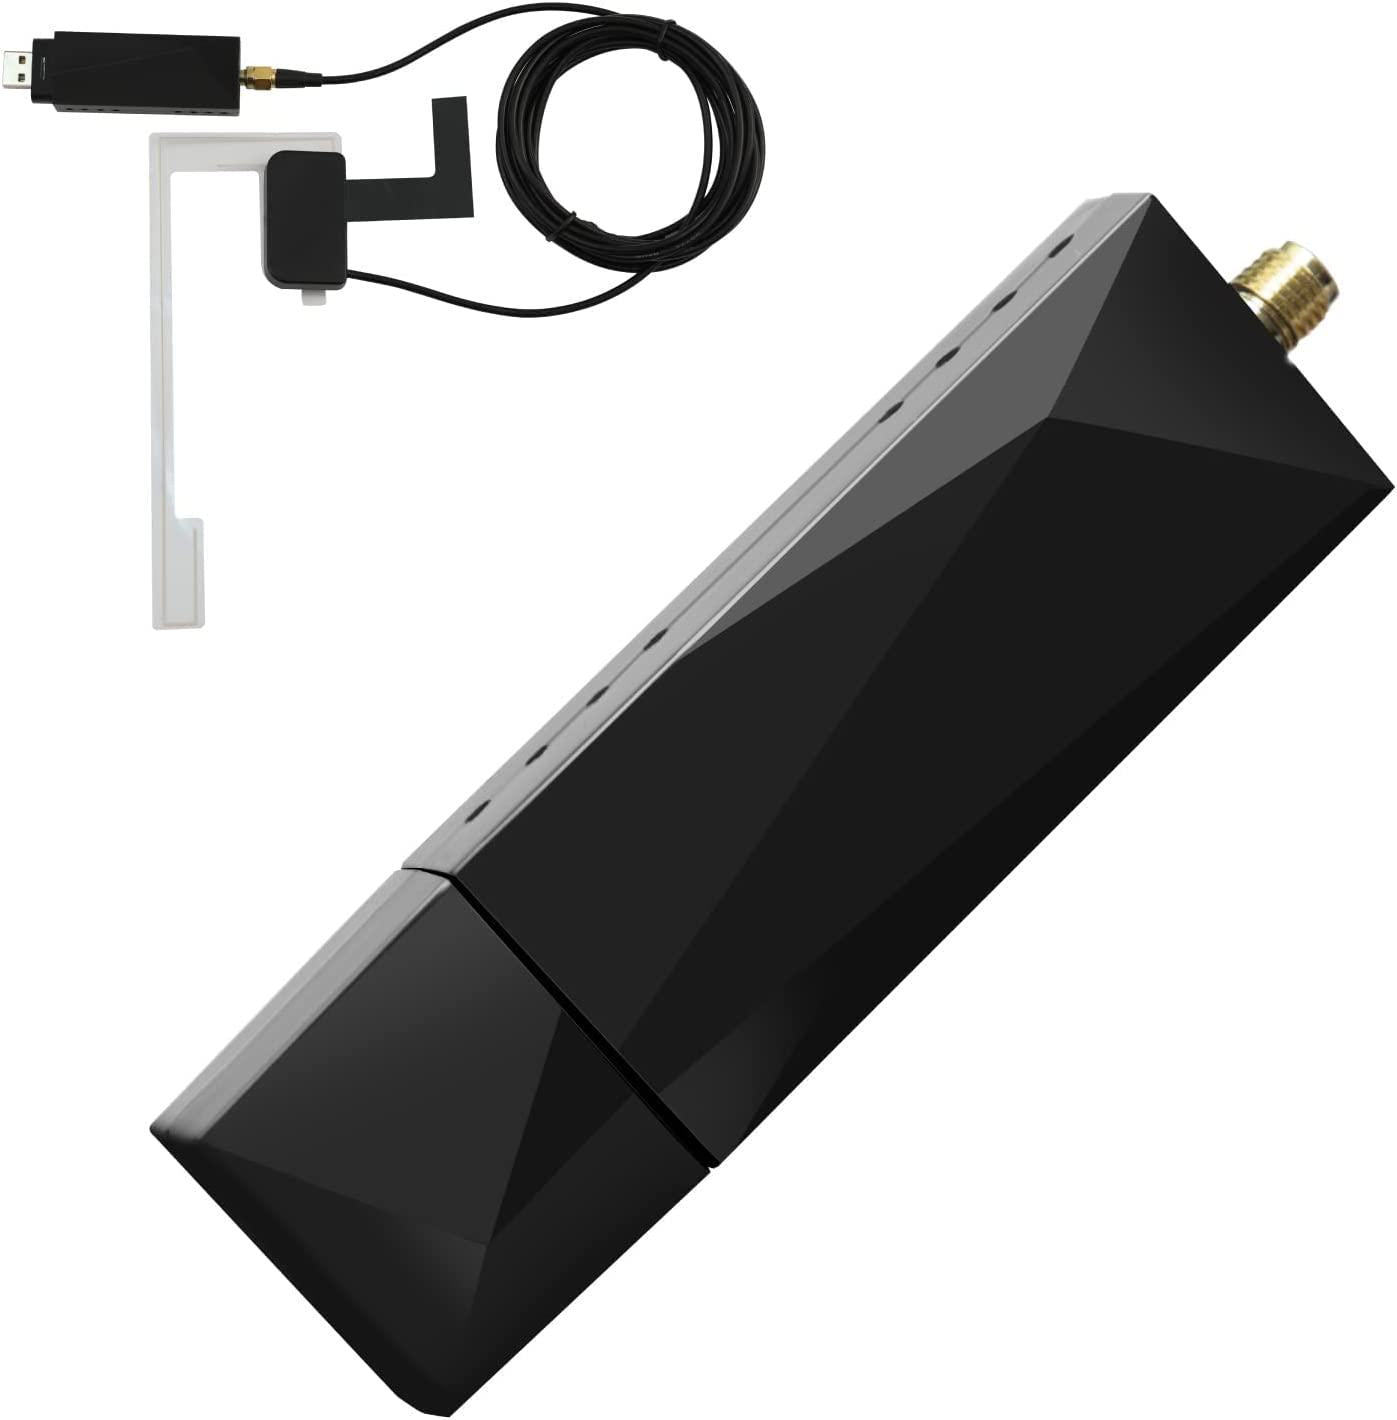 Eonon, Eonon DAB/DAB+ Radio Receiver Digital Transmission Antenna USB Dongle Android Car Stereo Headunit